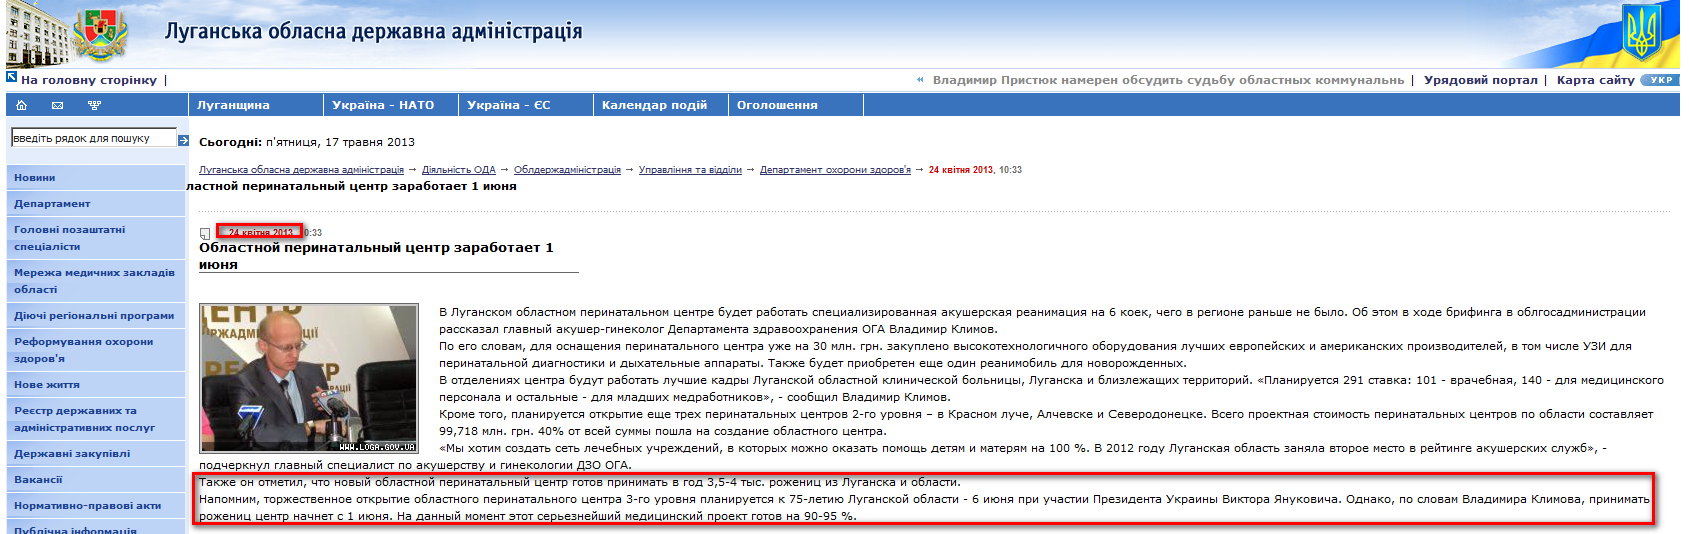 http://www.loga.gov.ua/oda/about/depart/oz/news/2013/04/24/news_48979.html